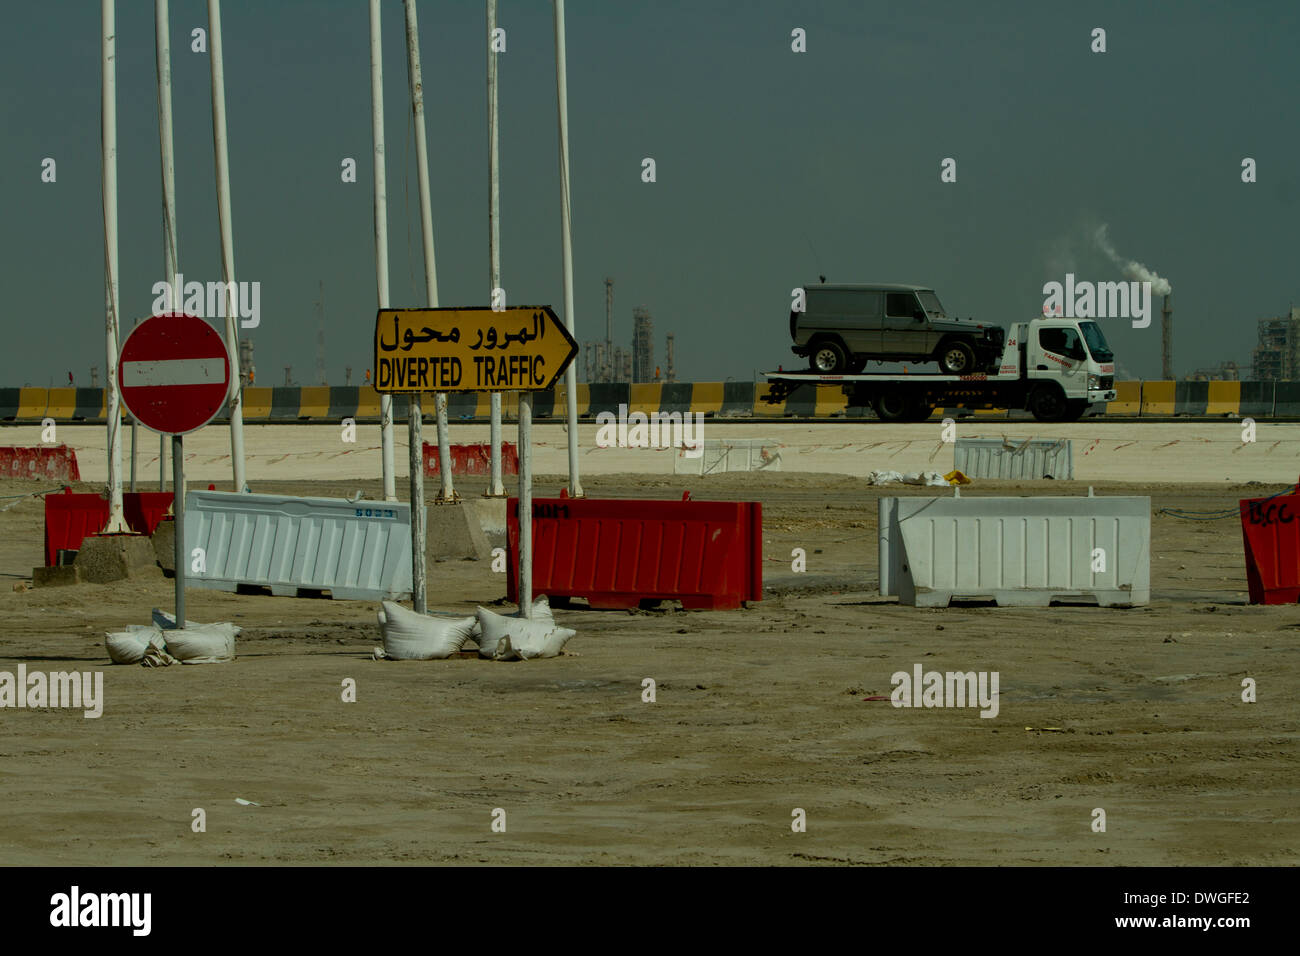 Katar-Baustelle Baustellen-Verkehr-Umleitung Stockfoto